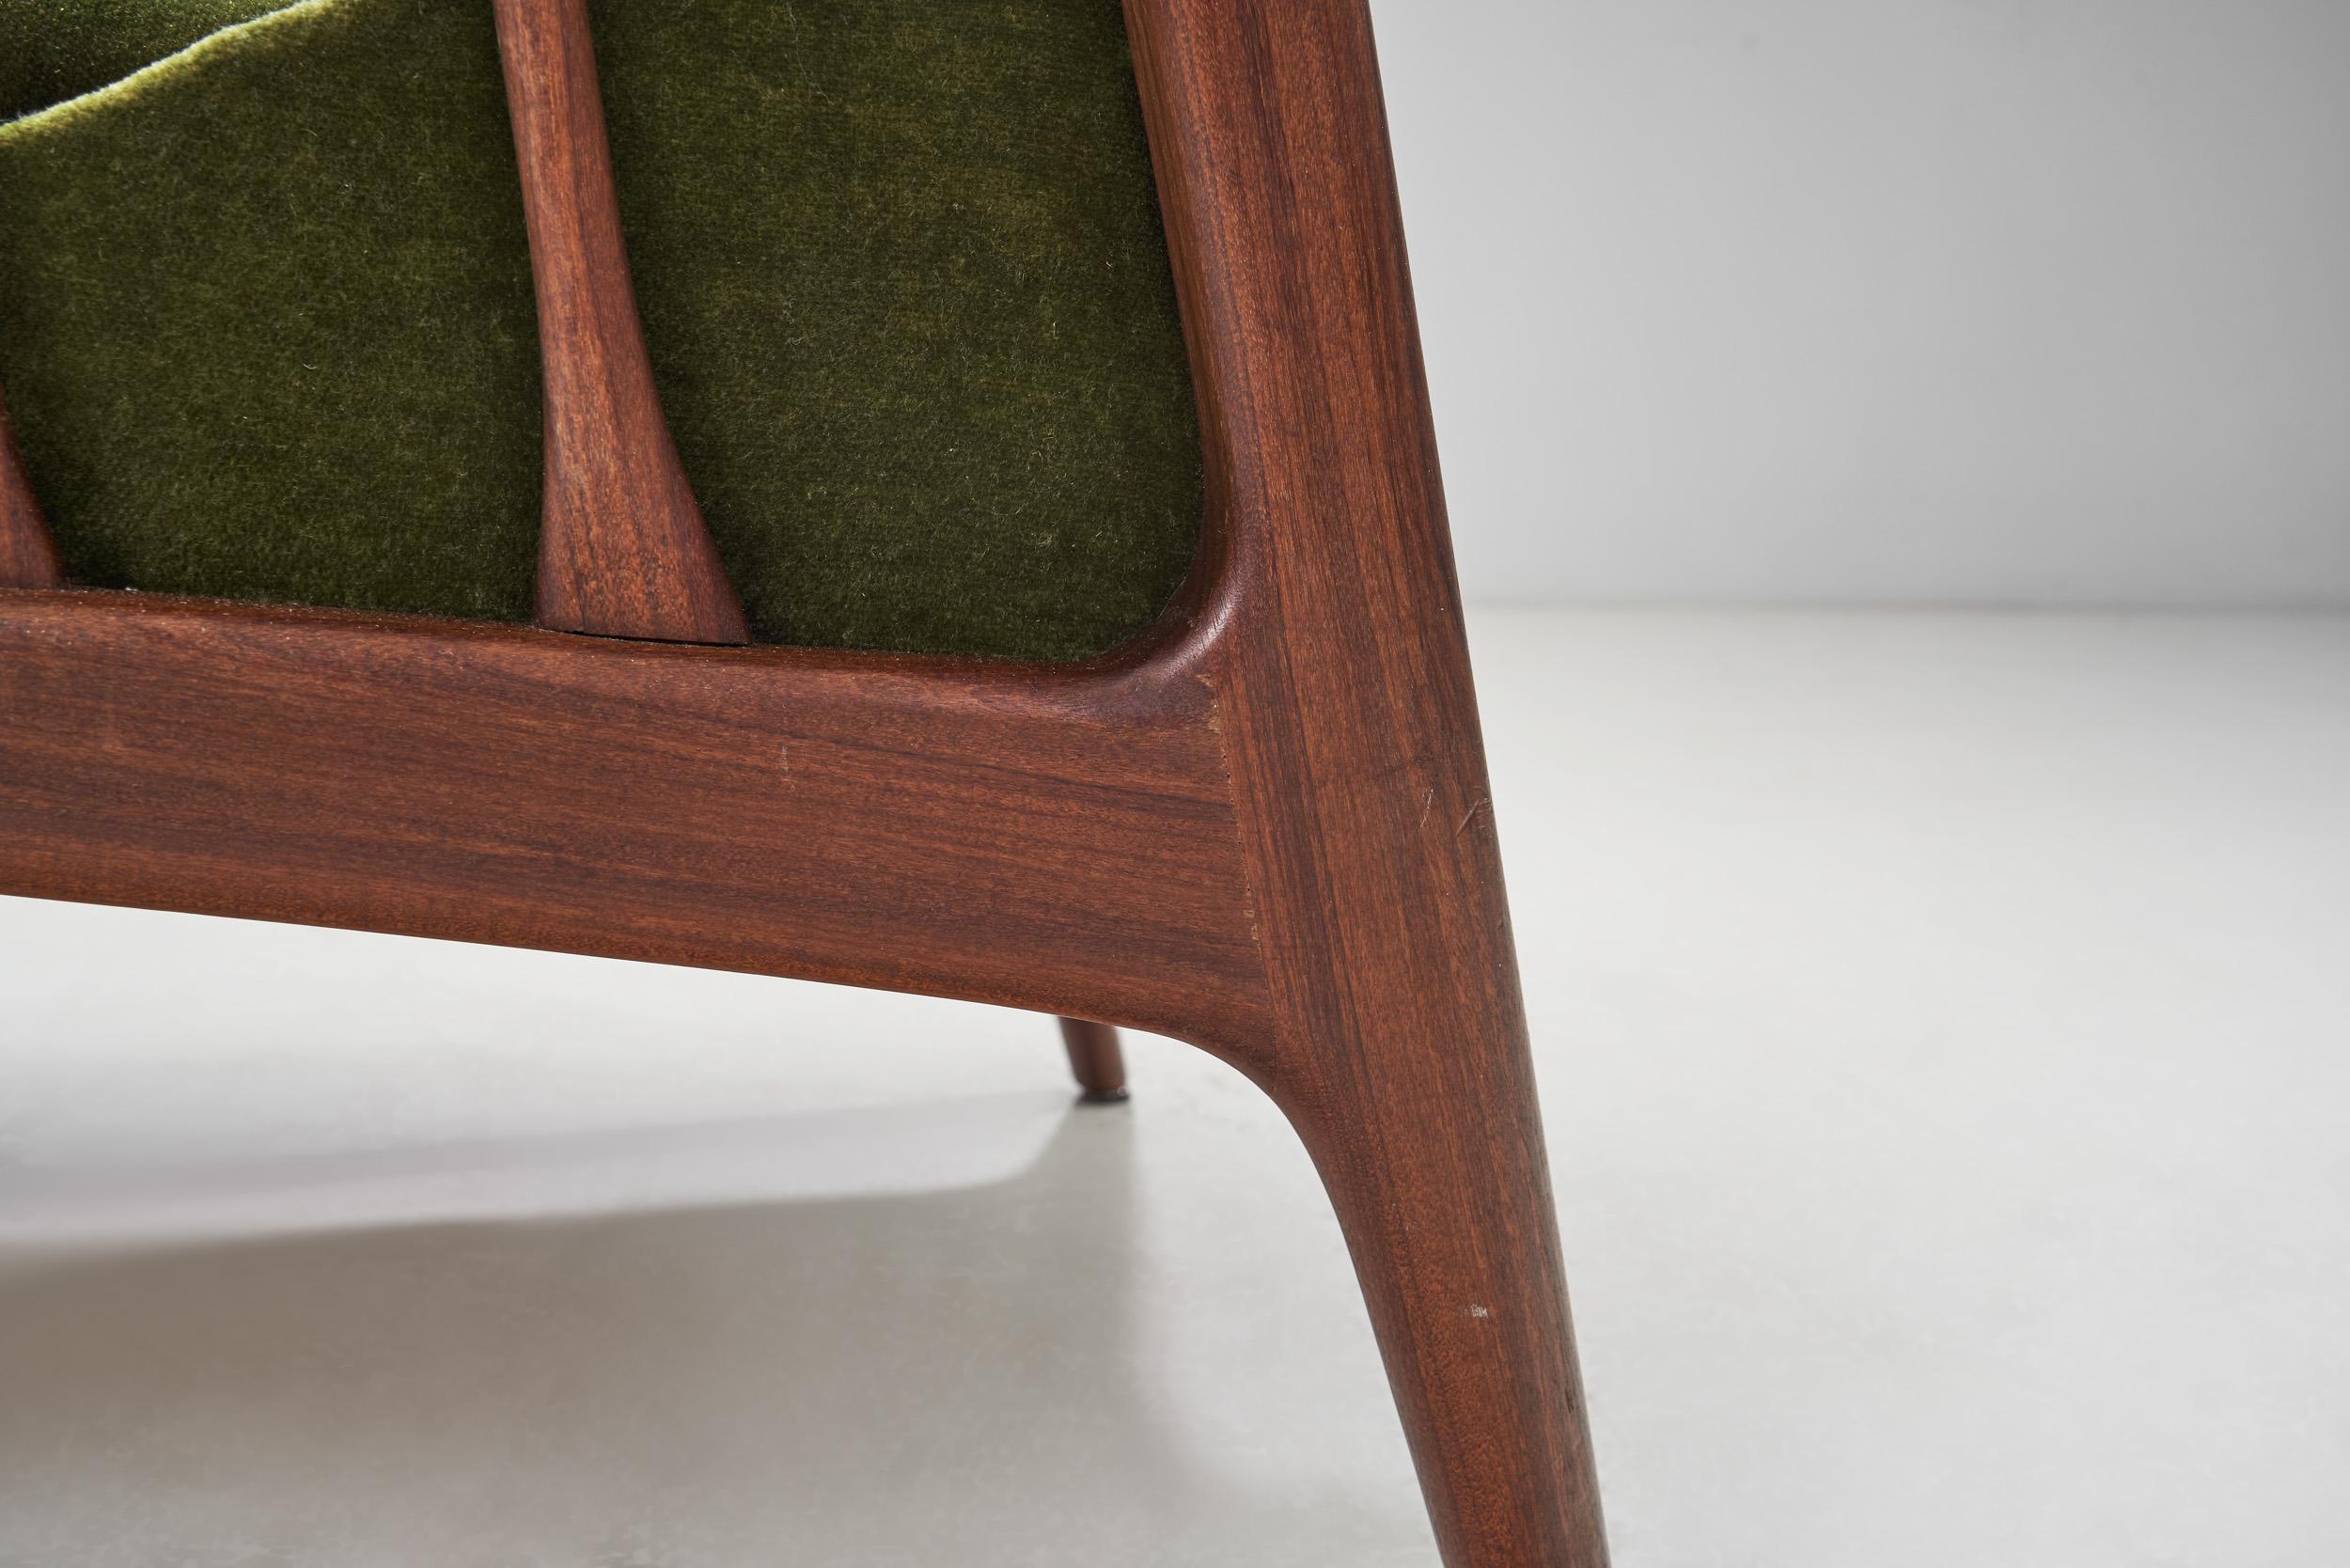 Teak Upholstered Armchairs with Slat Armrests, Denmark 1960s For Sale 7